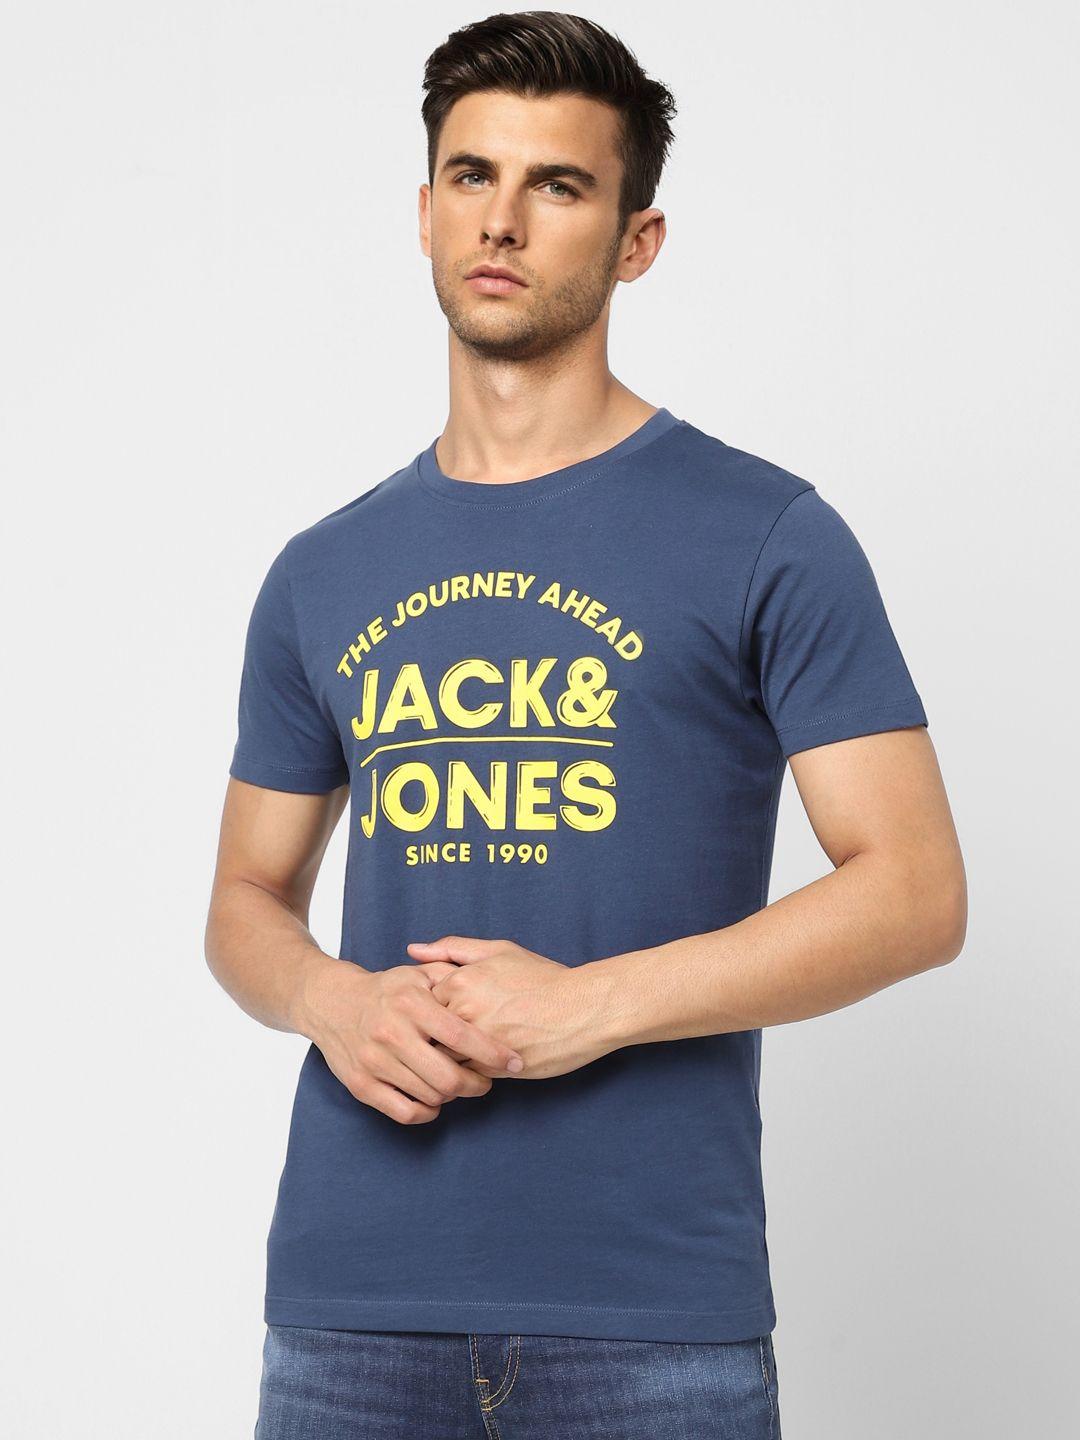 jack & jones men navy blue typography printed pure cotton slim fit t-shirt